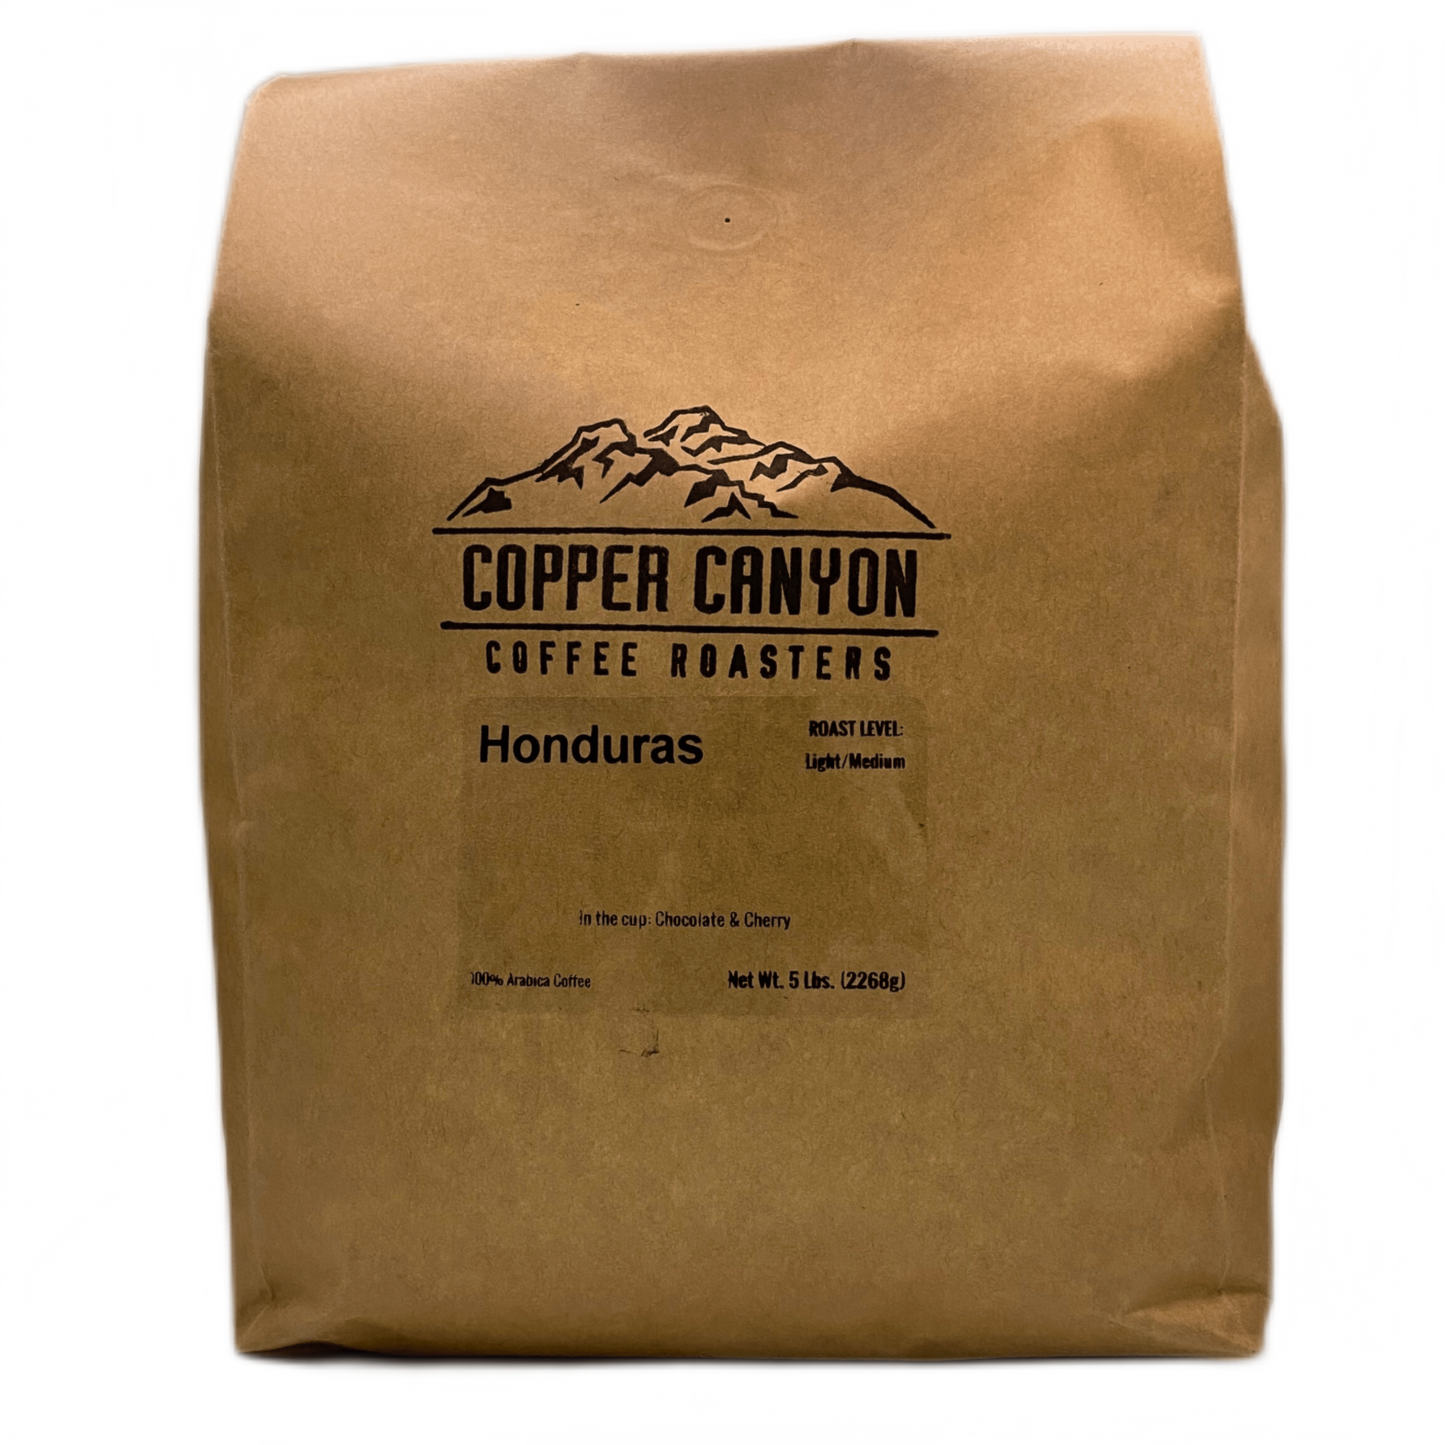 5 pound bag of Honduras light-medium roast coffee by Copper Canyon